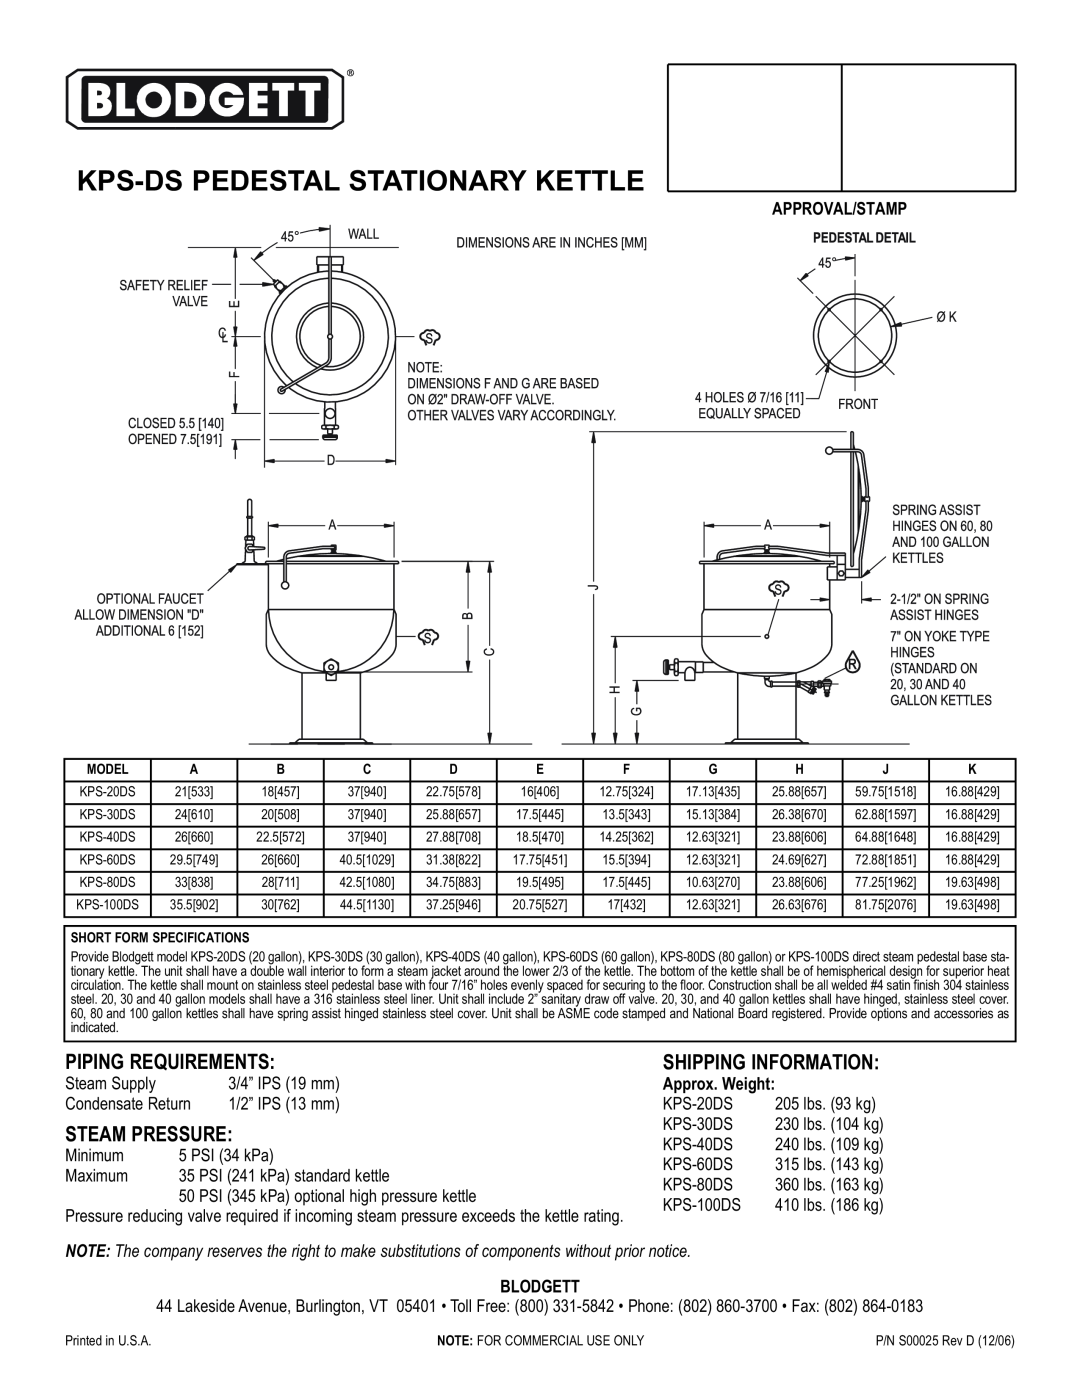 Blodgett KPS-DS Kps-Dspedestal Stationary Kettle, Piping Requirements, Steam Pressure, Shipping Information, Blodgett 